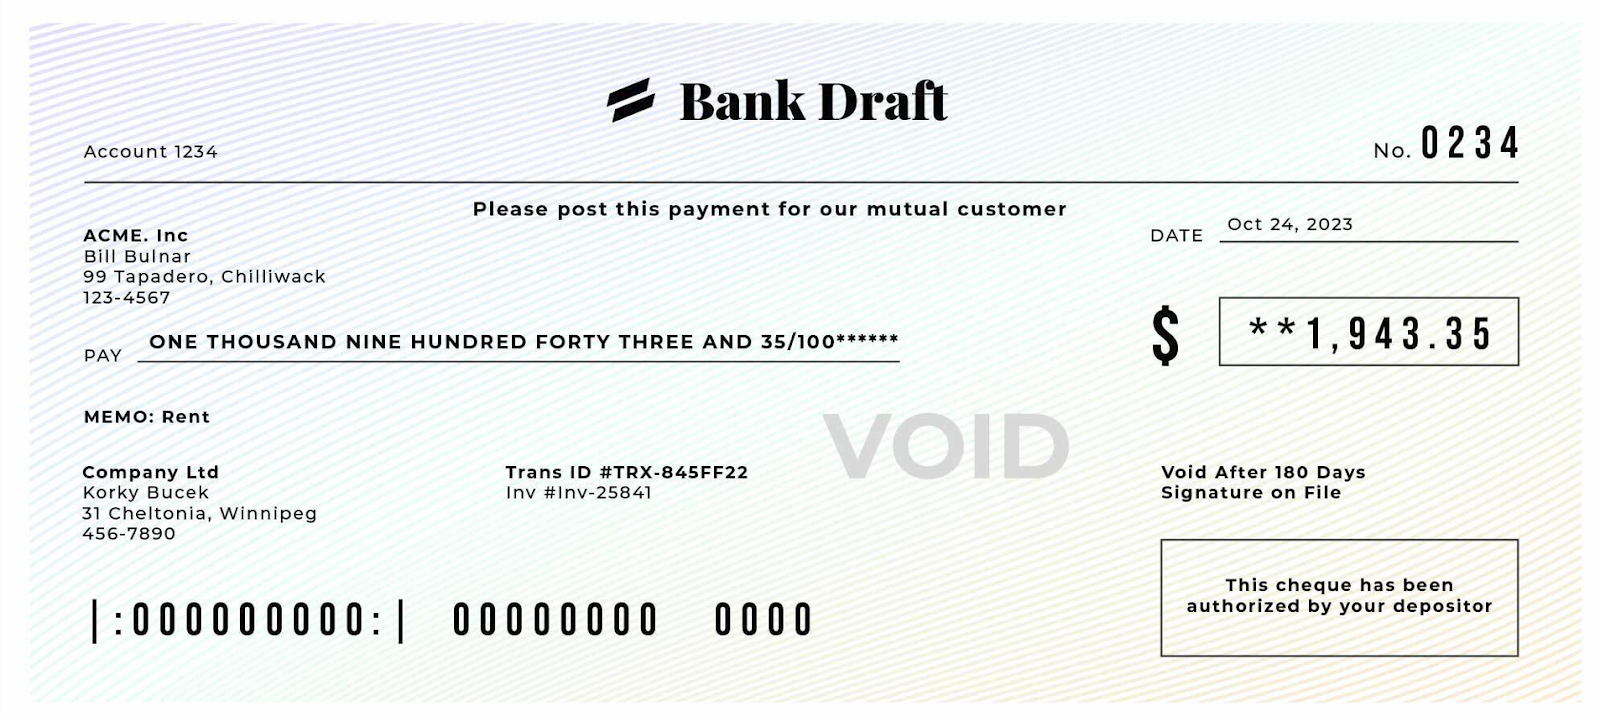 Bank draft example